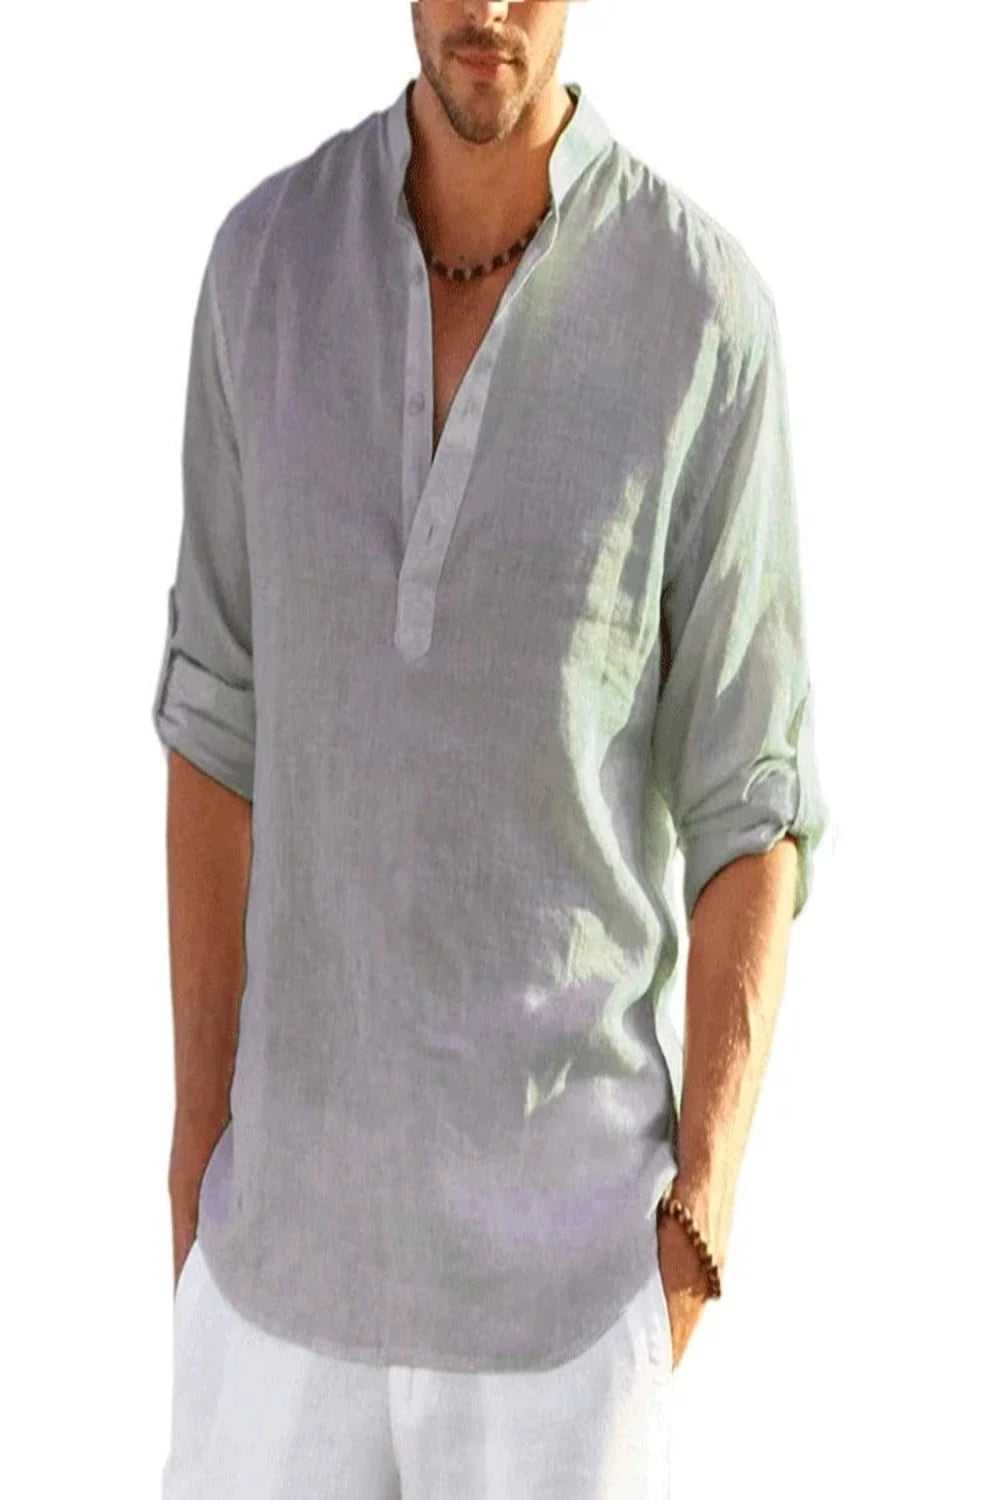 Cotton Long Sleeve Beach Tops for Men gray Long Sleeve Tops JT's Designer Fashion